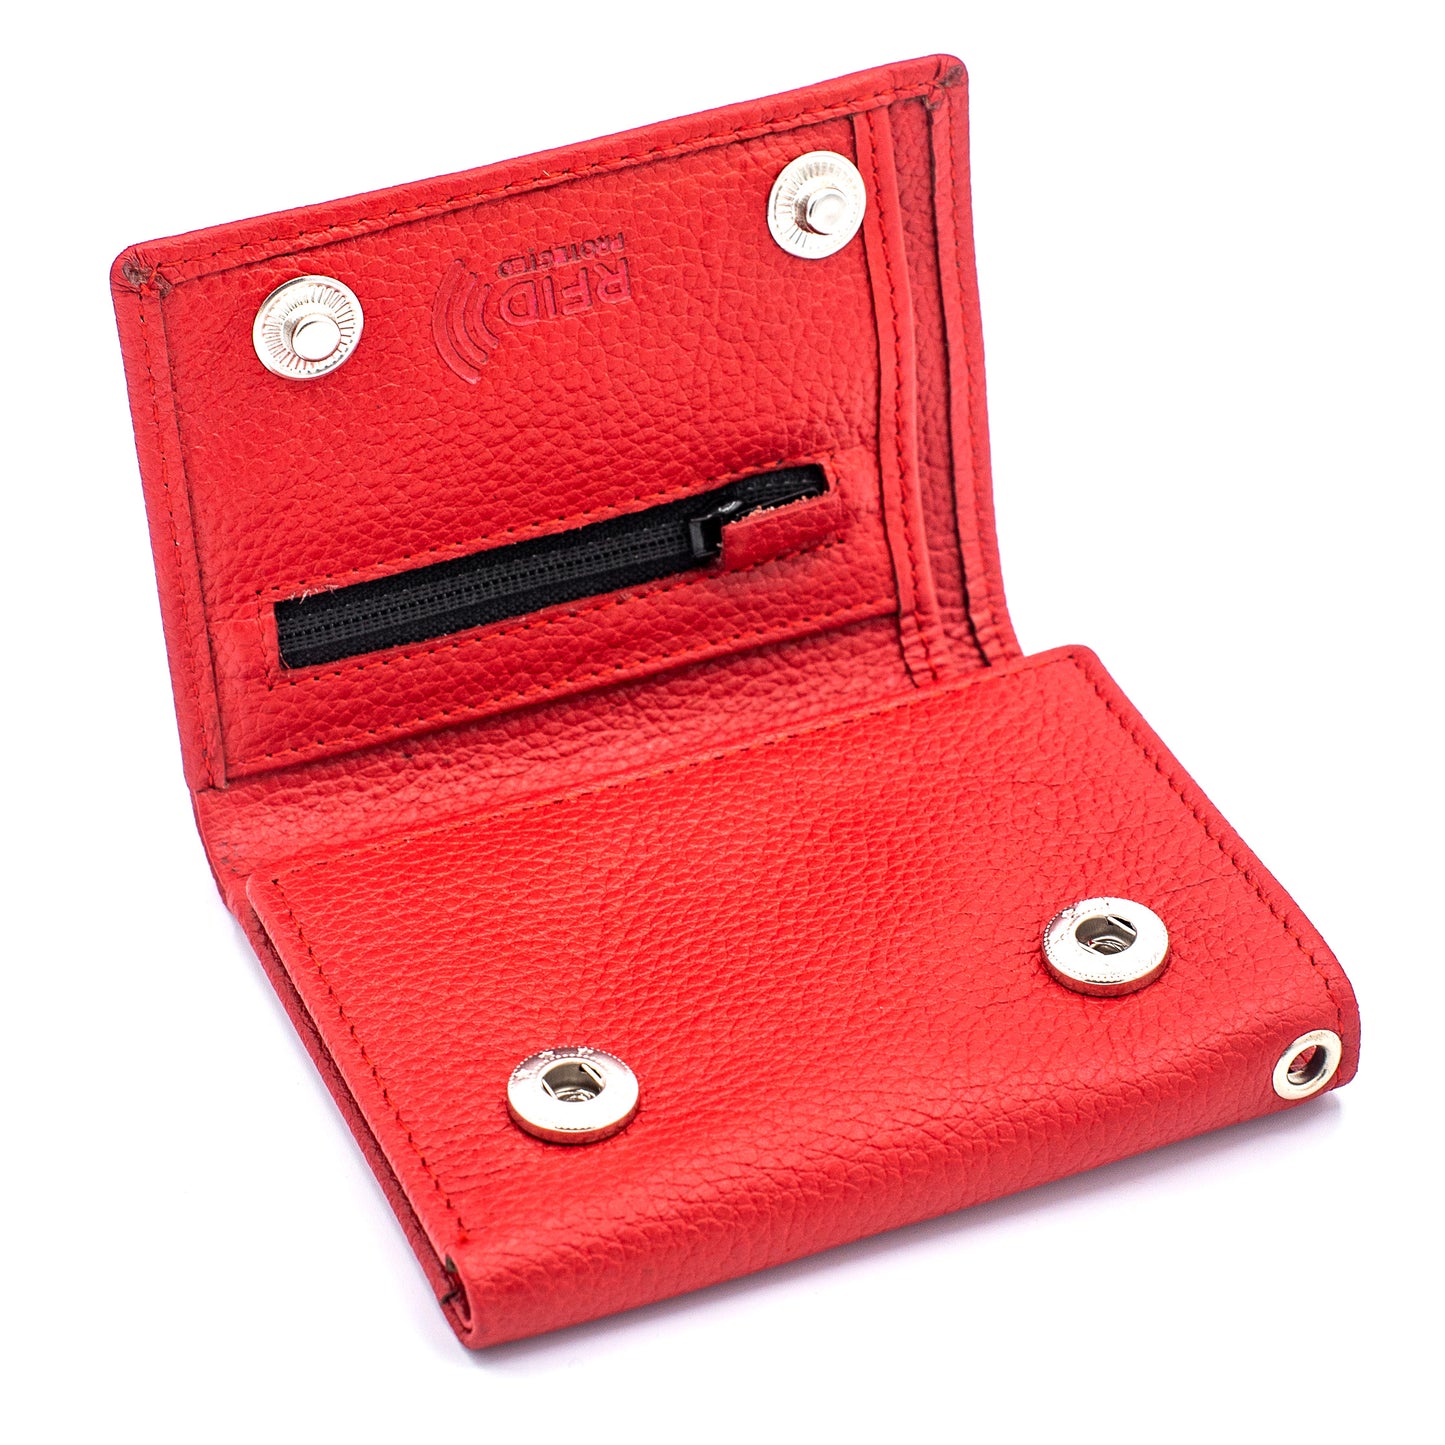 Trifold RFID Safe Leather Red Eye-Let Hole Wallet for Men With Key Holder And Zipper Pocket Inside